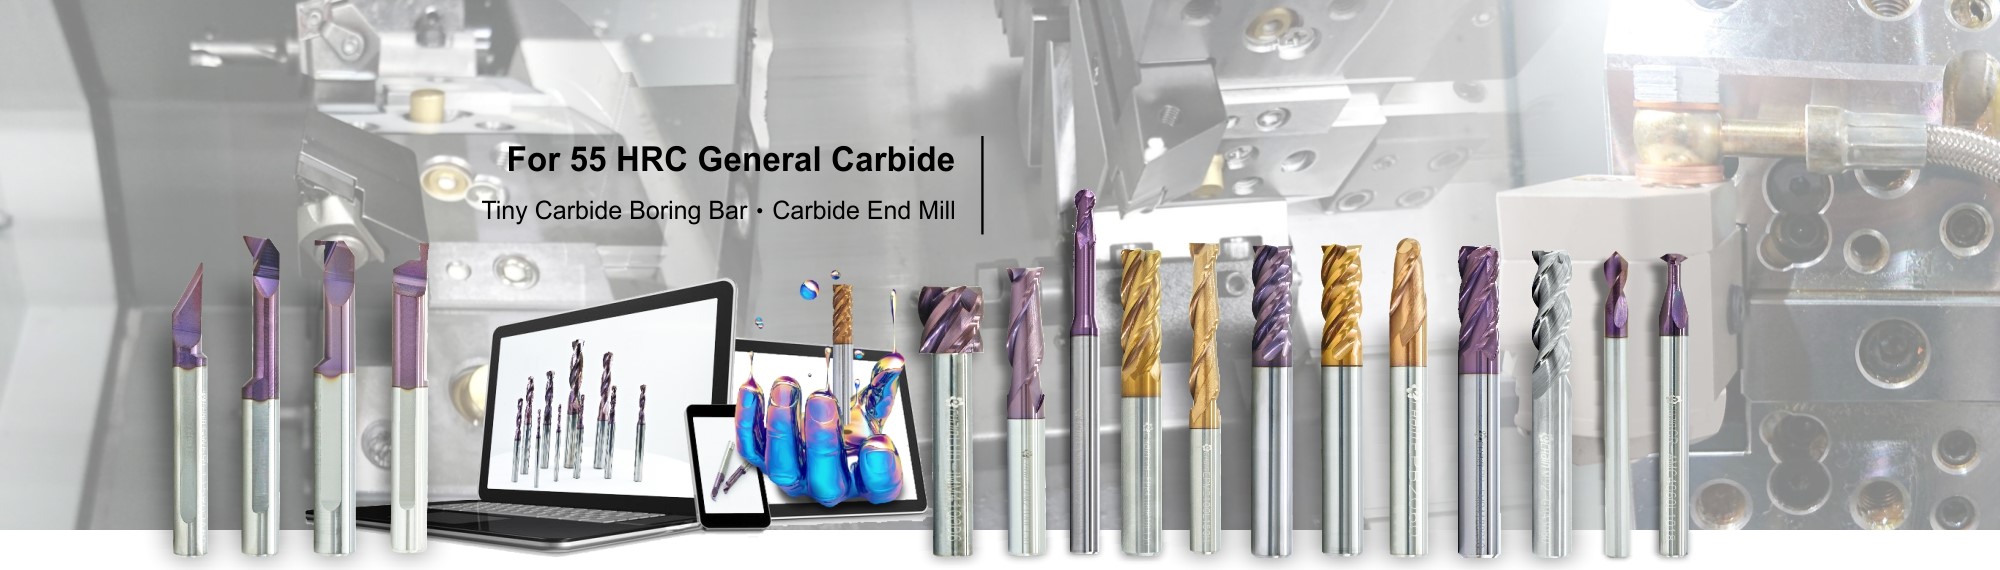 Carbide end mill and Carbide drill and Tiny carbide boring bar